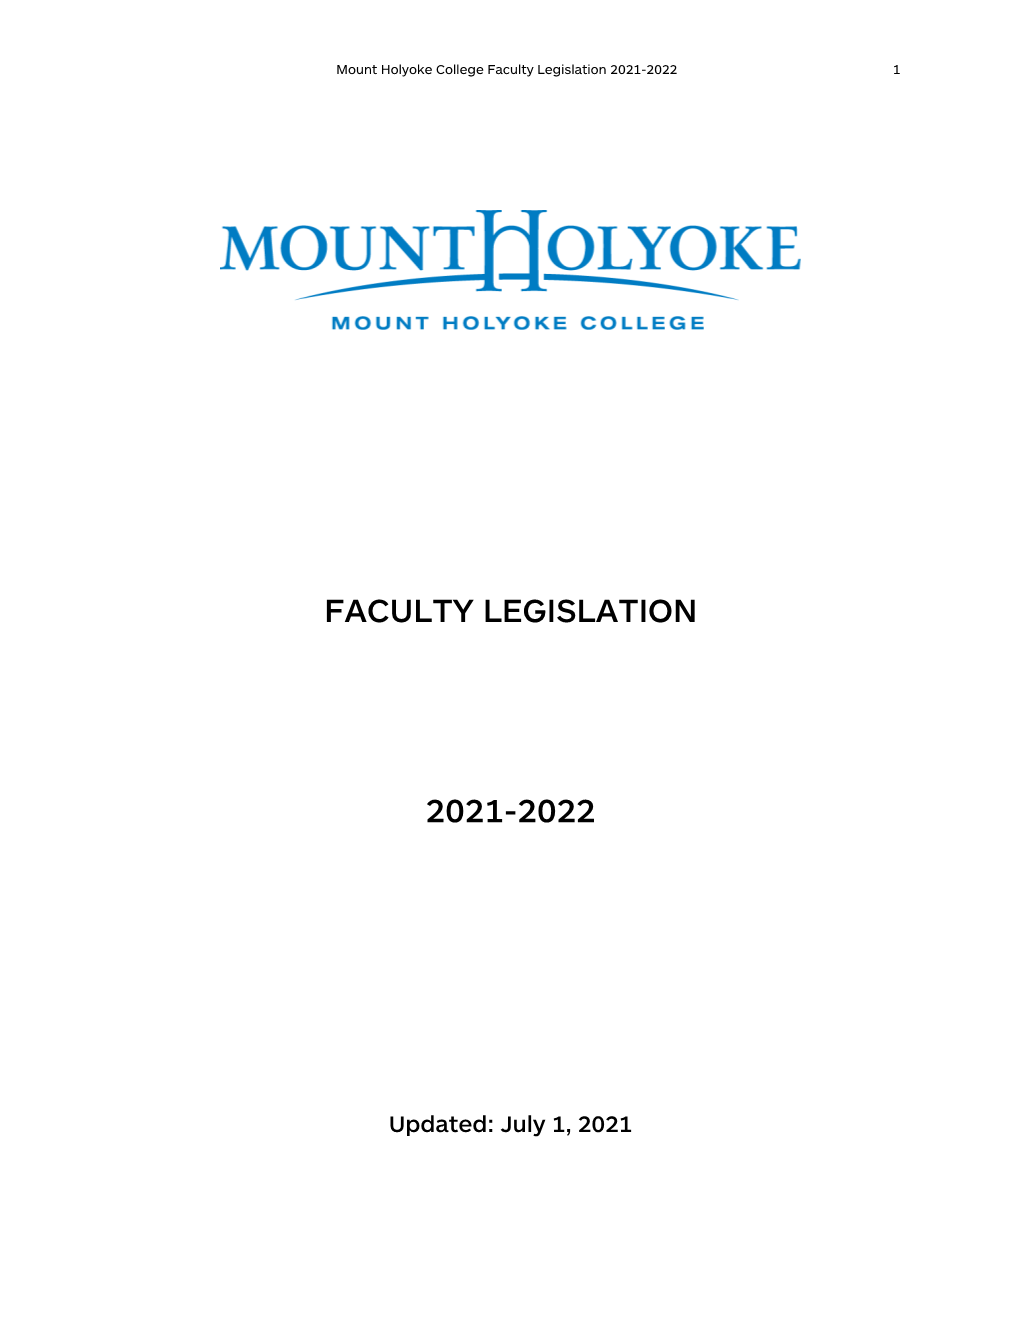 Faculty Legislation 2021-2022 1